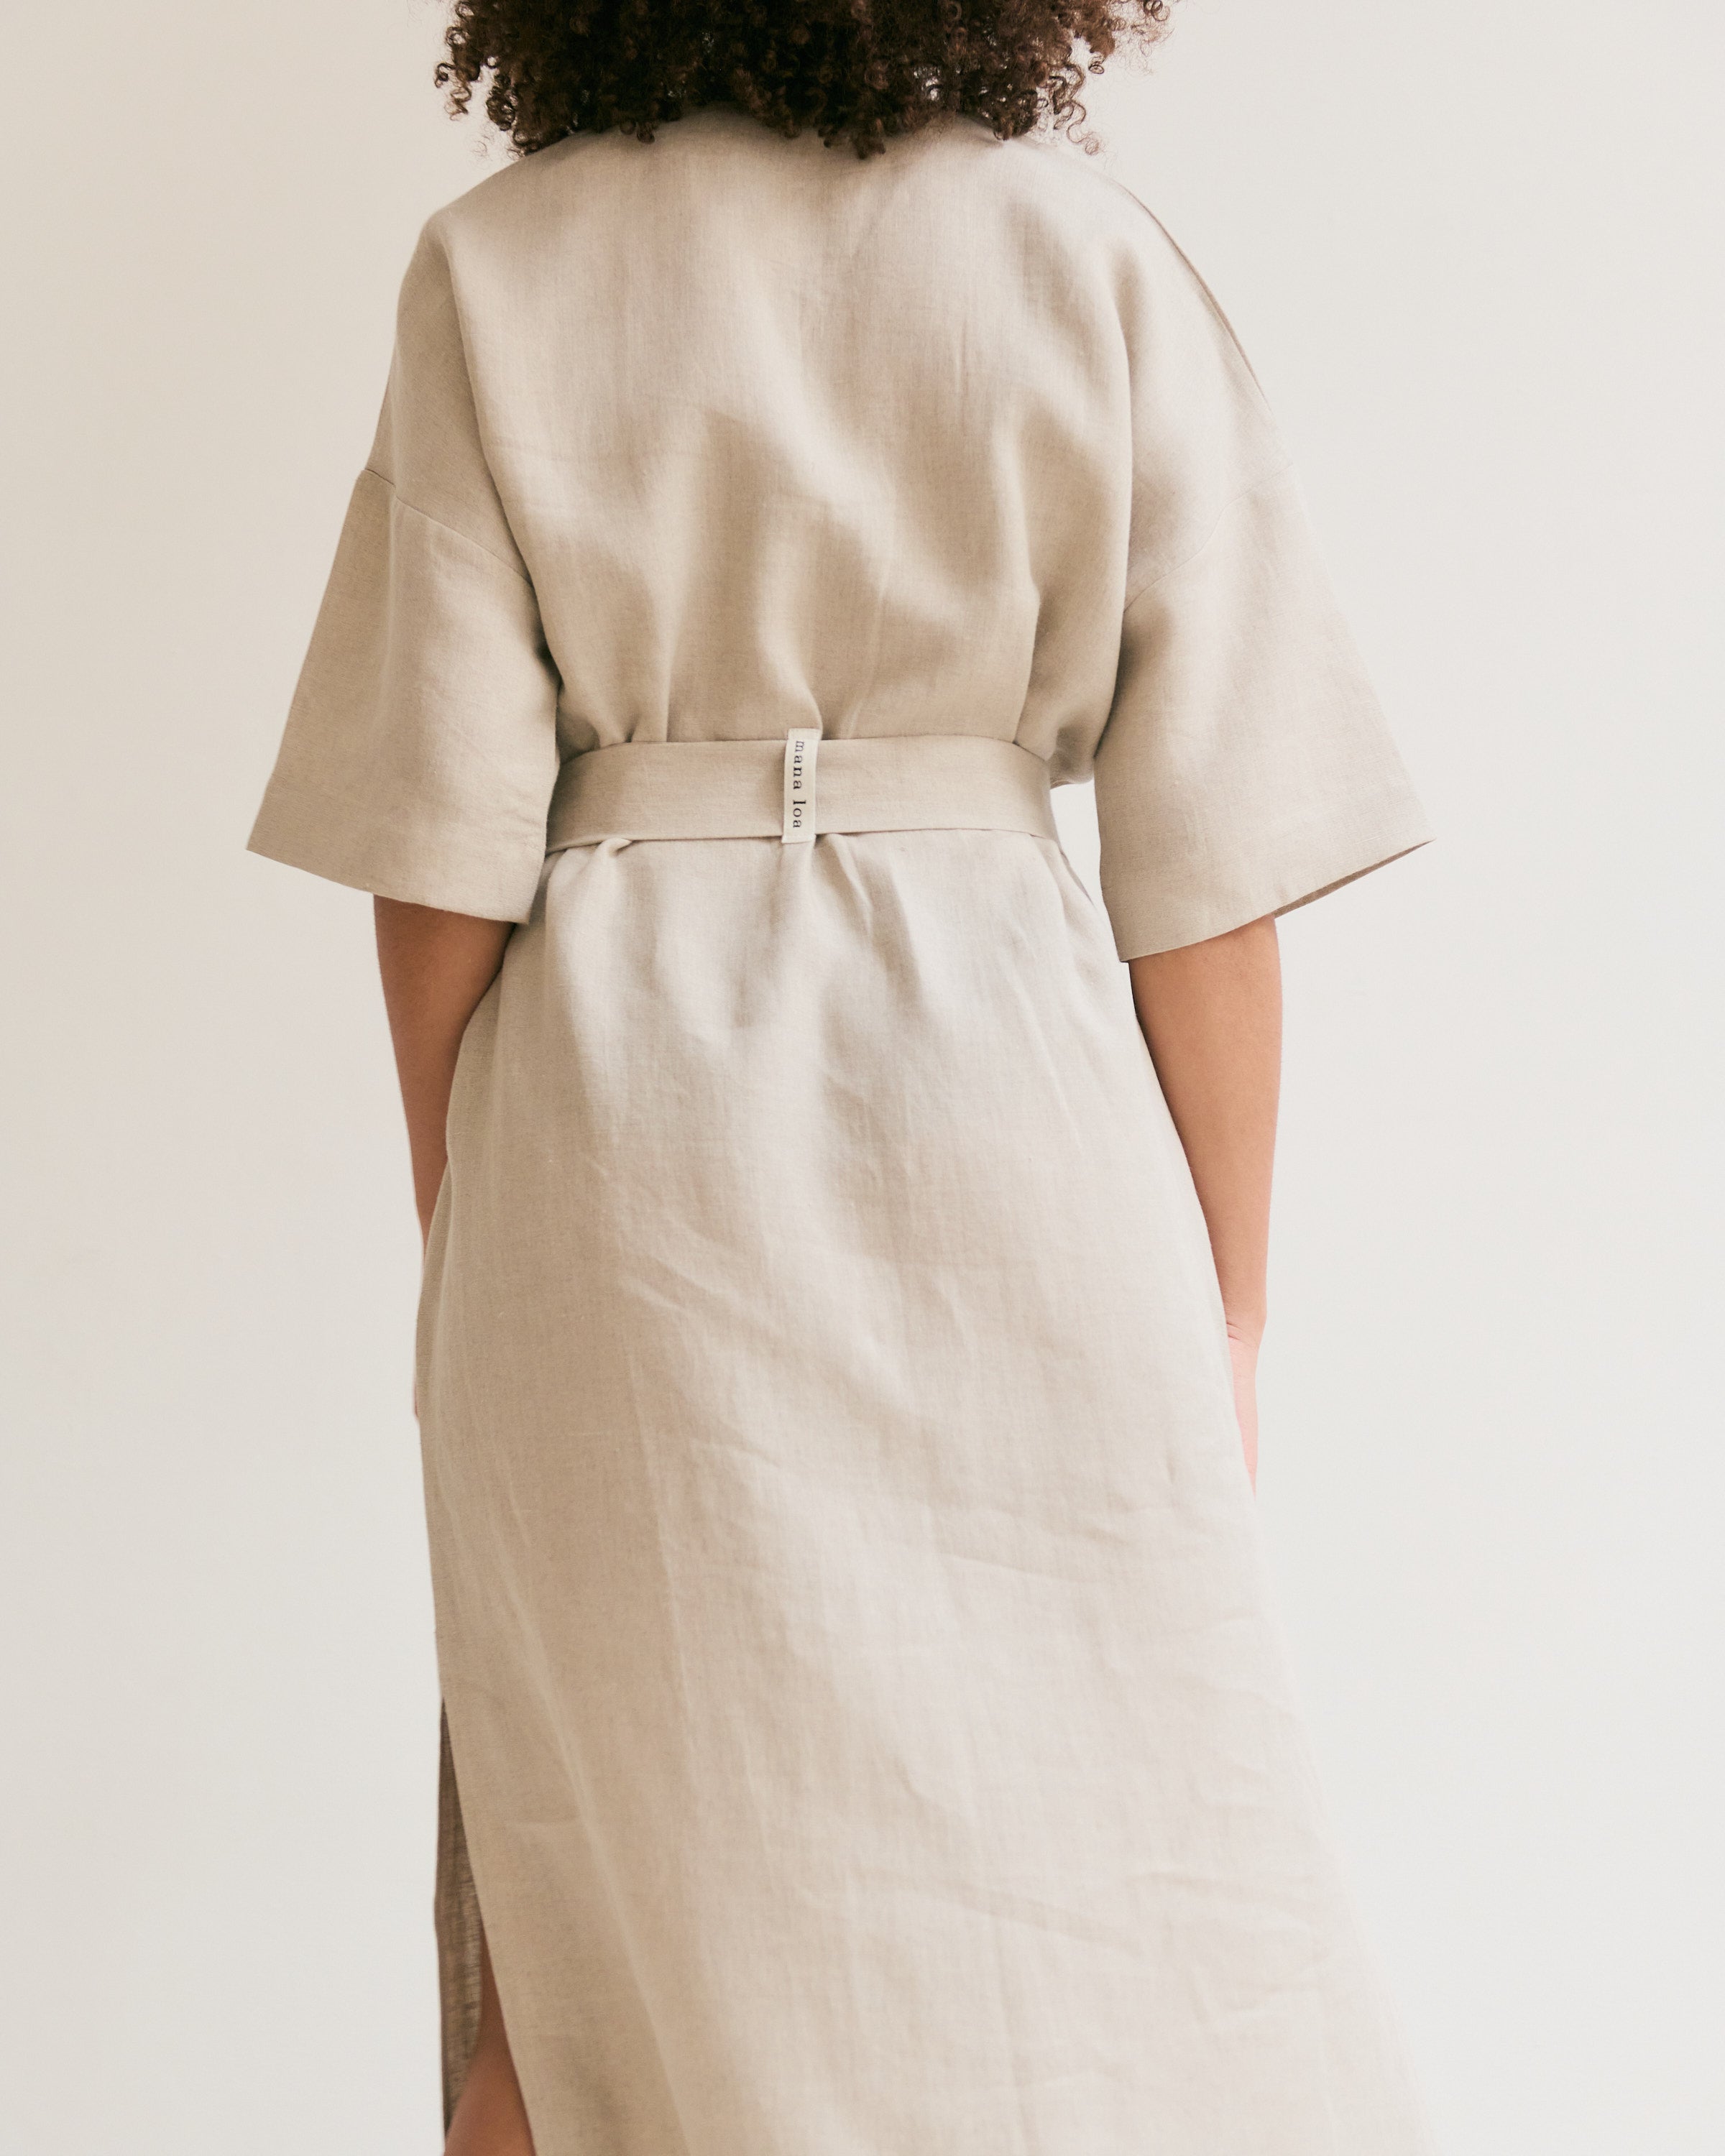 Natural linen straight dress with belt.